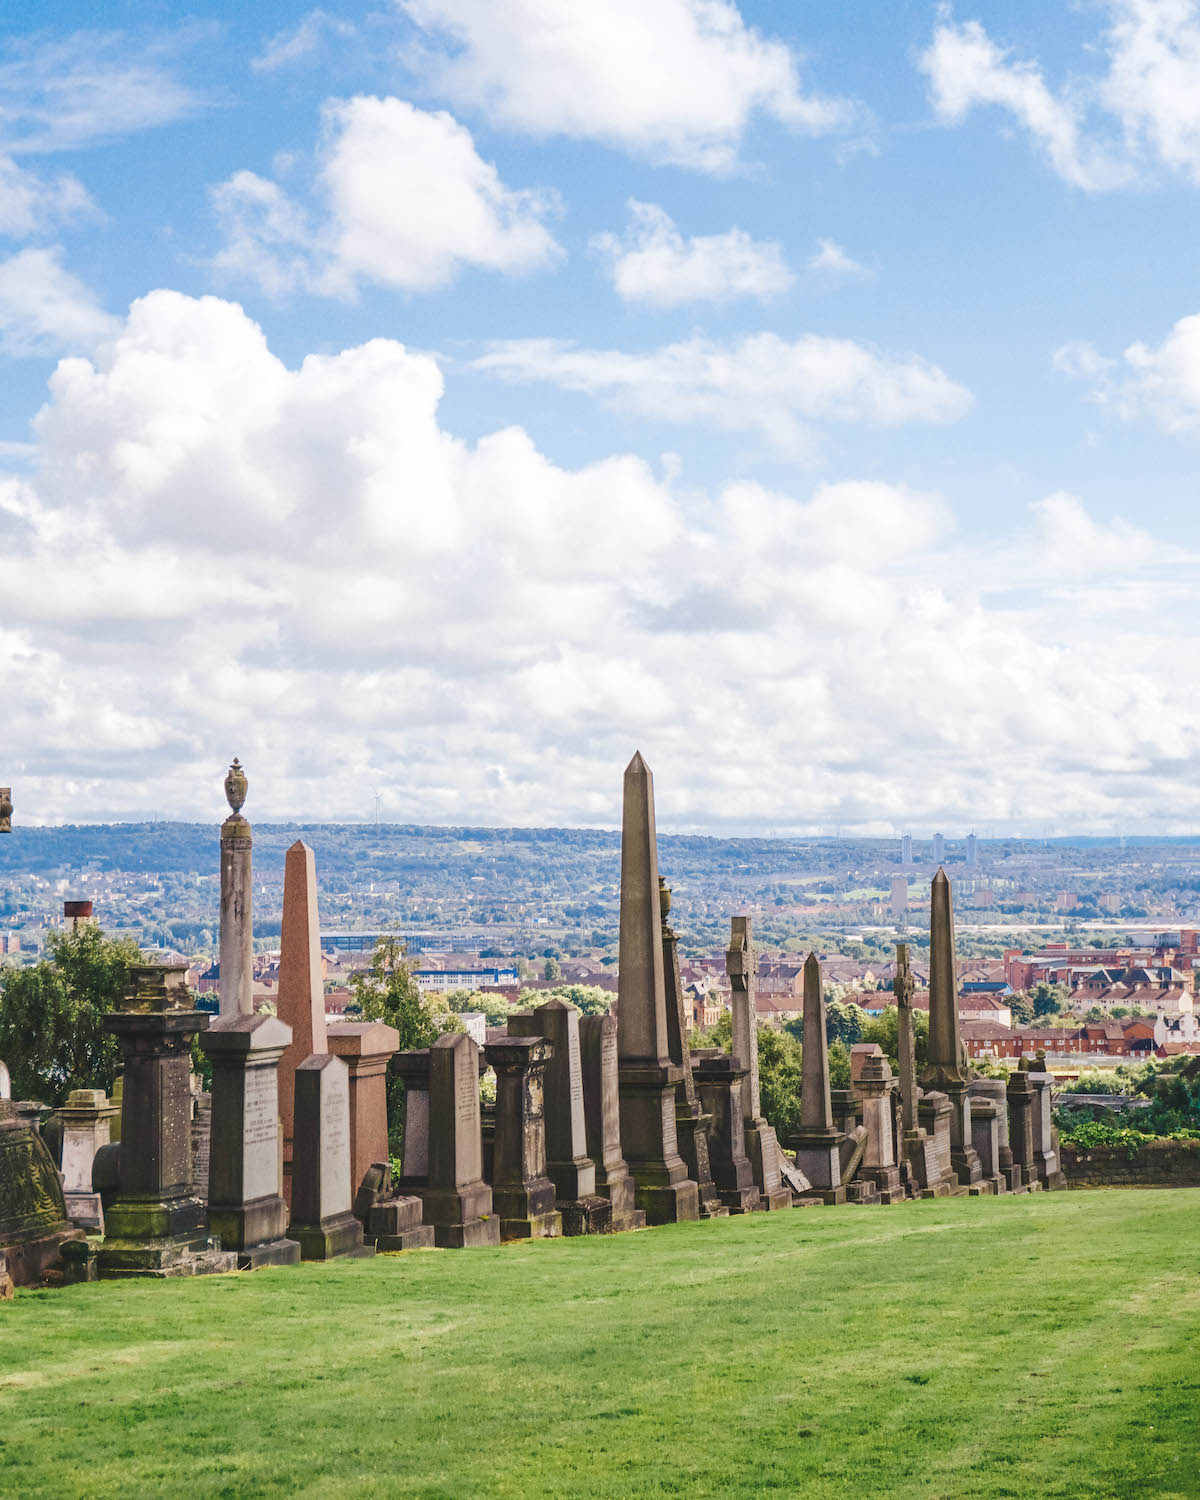 The Glasgow Necropolis and skyline view. 